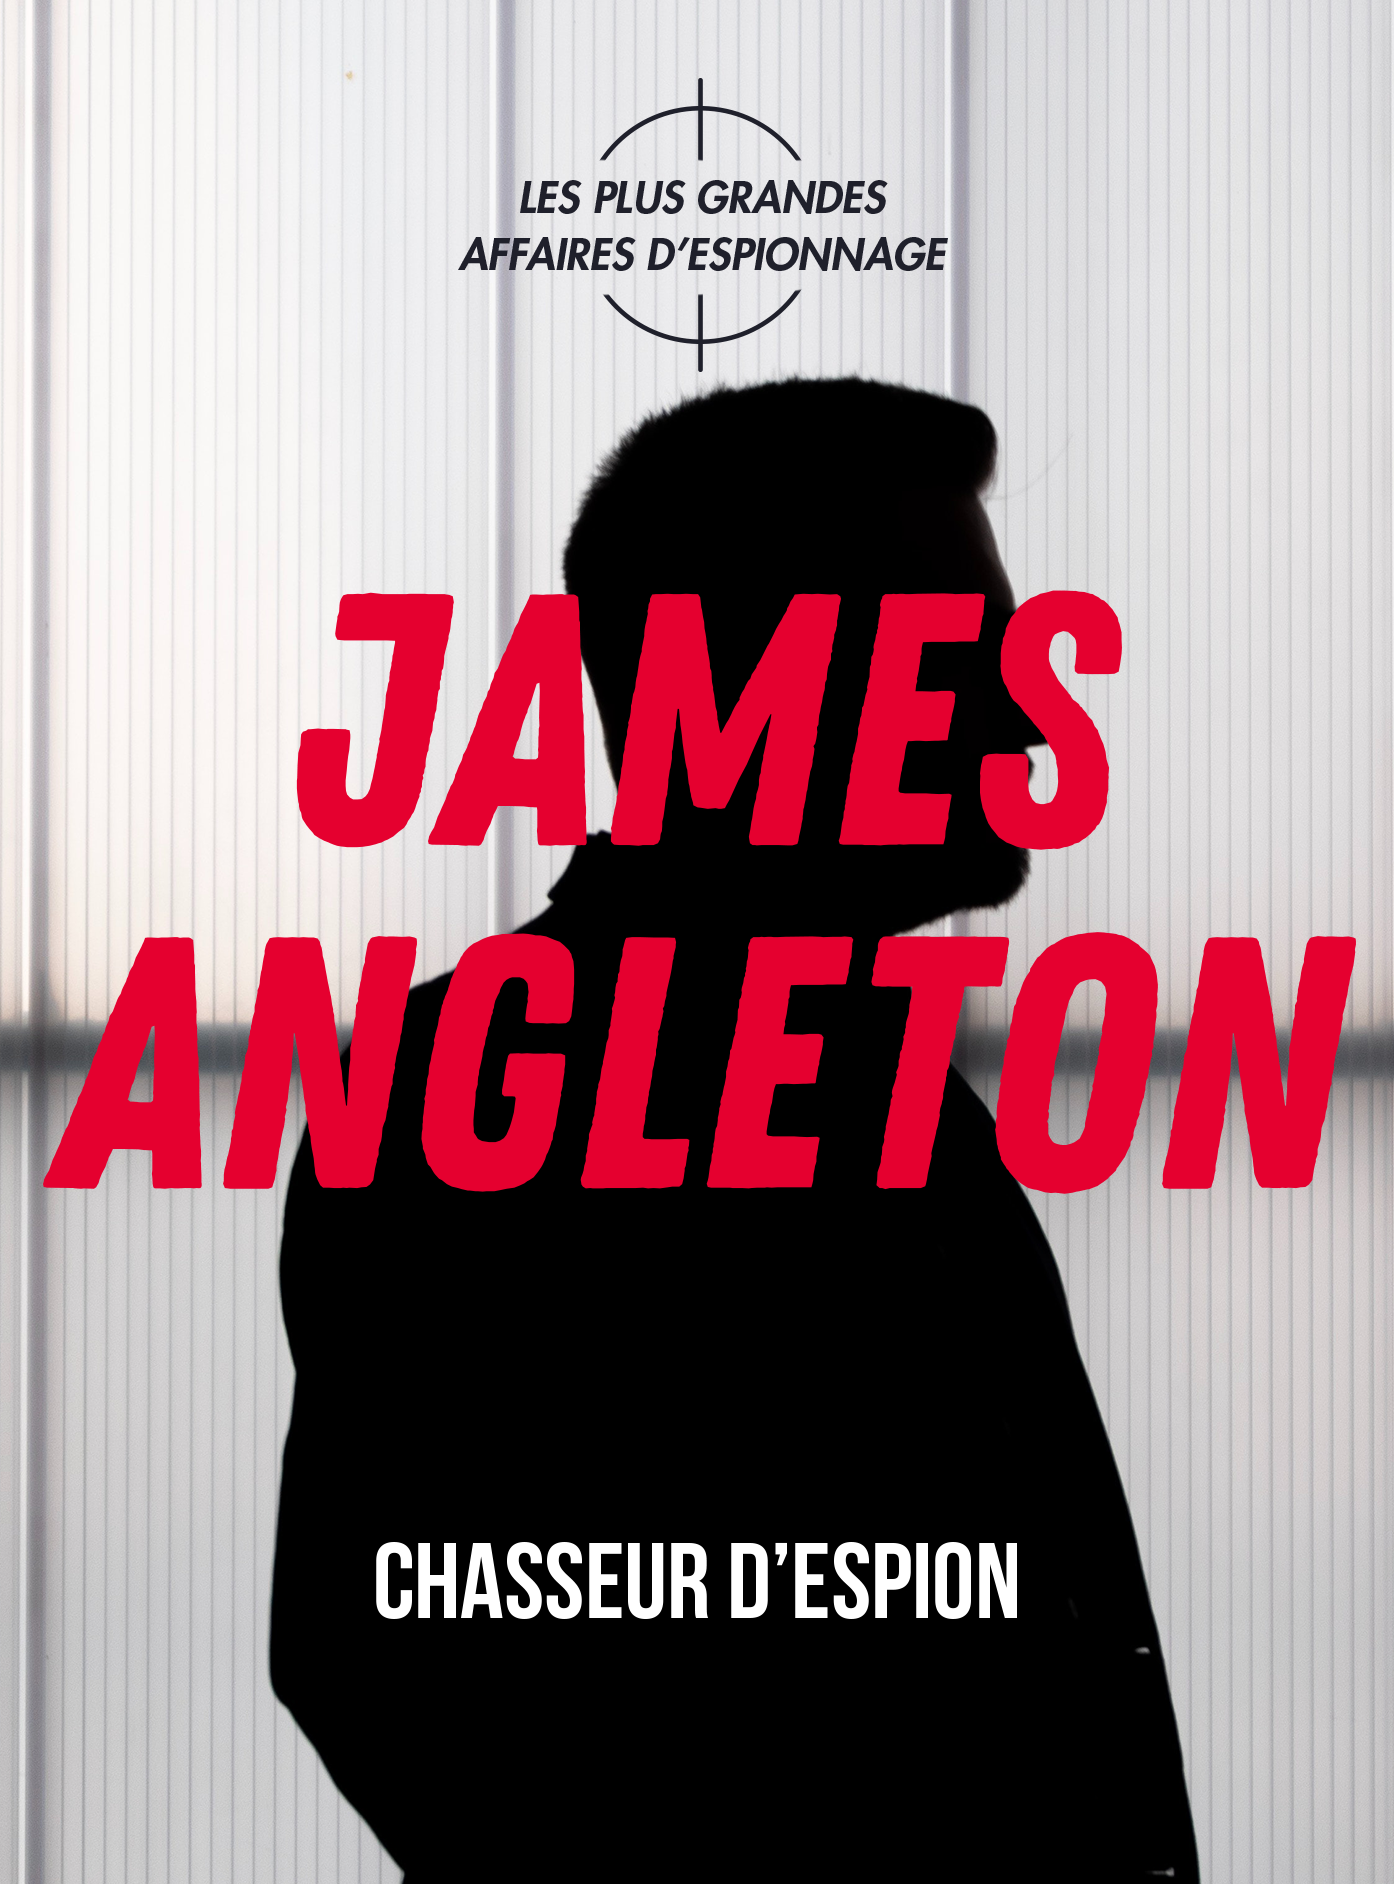 James Angleton, chasseur d’espion